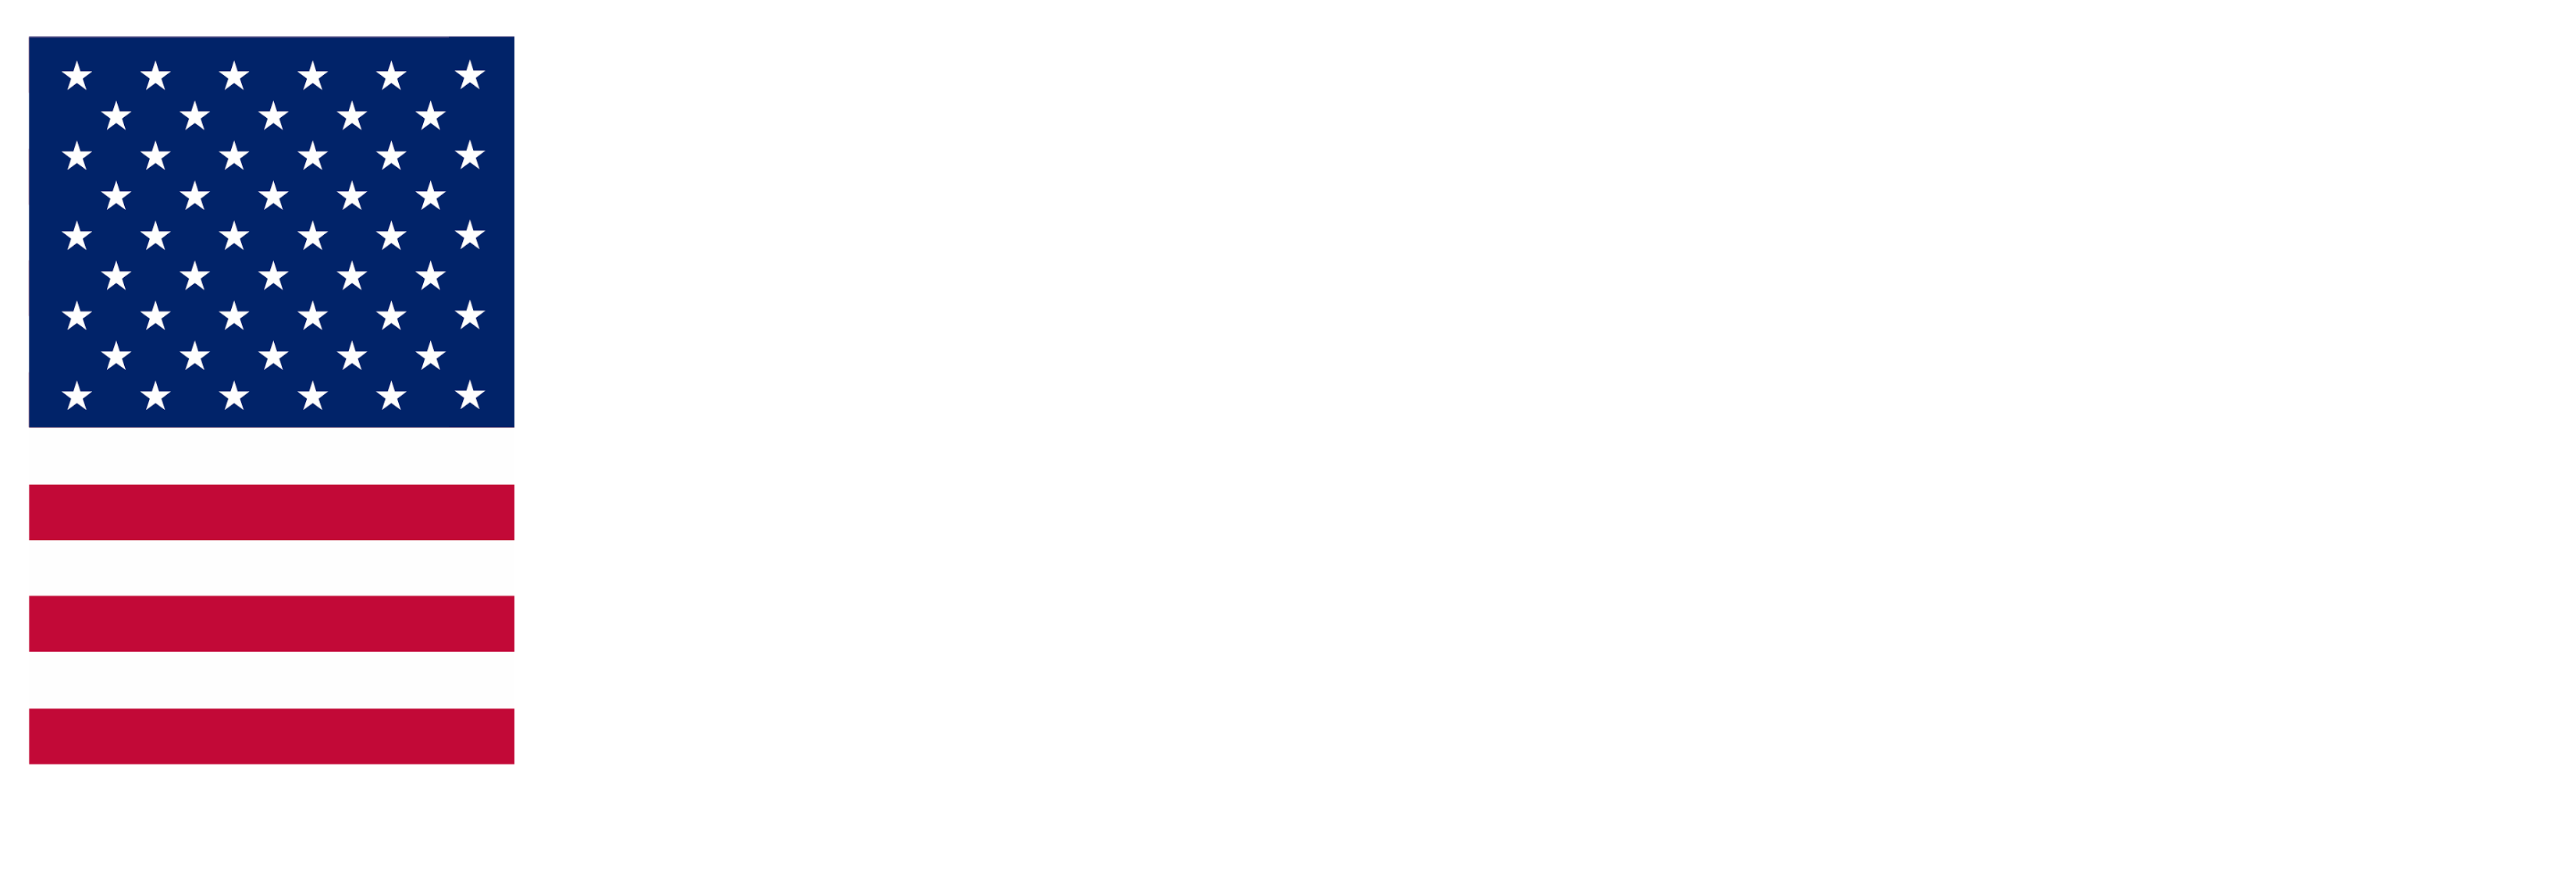 Professional Risk Management, Inc.